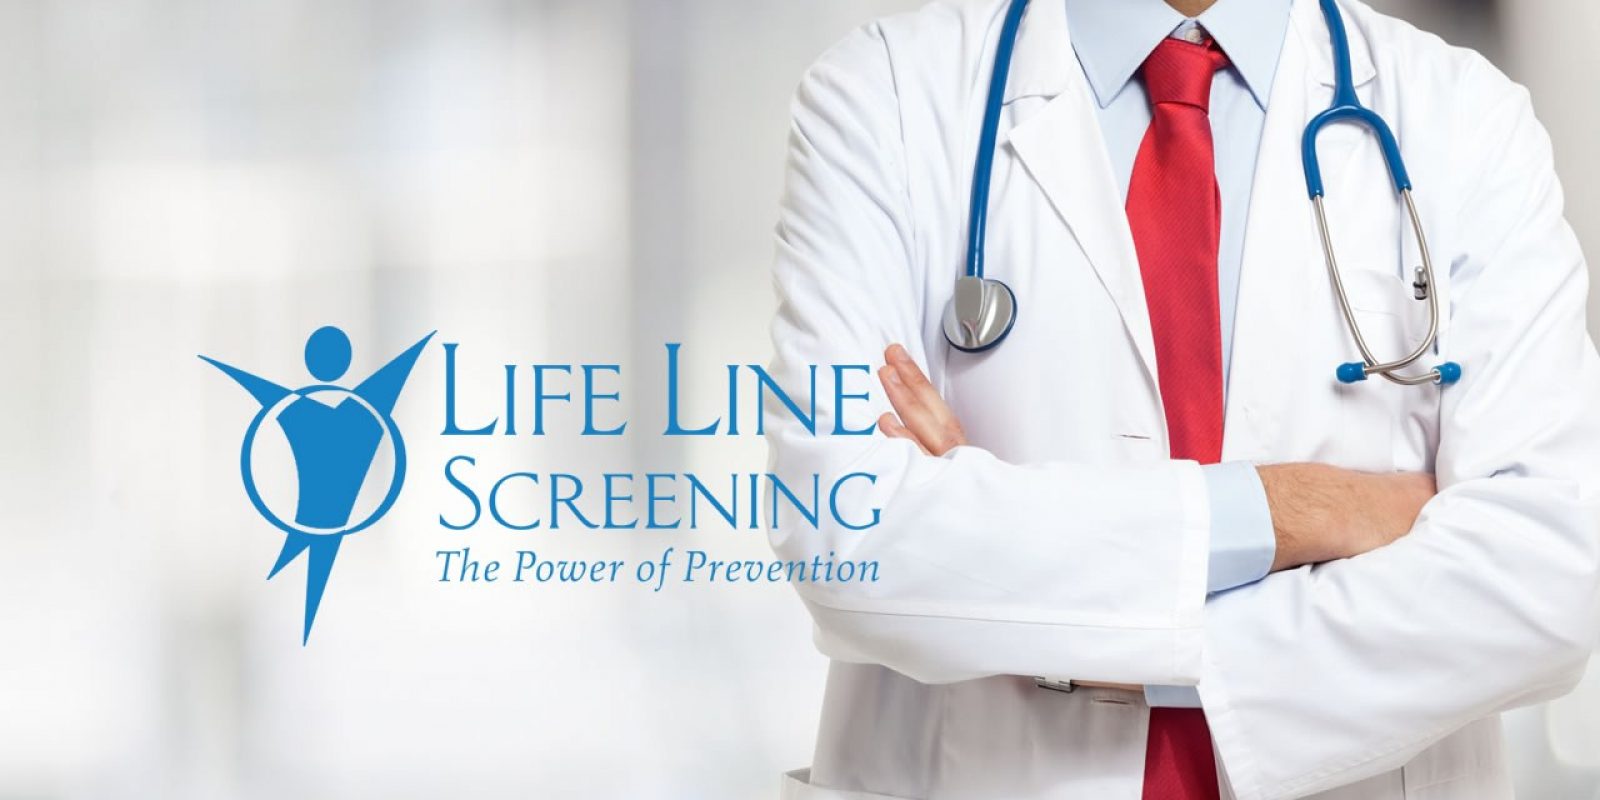 Life line screening banner